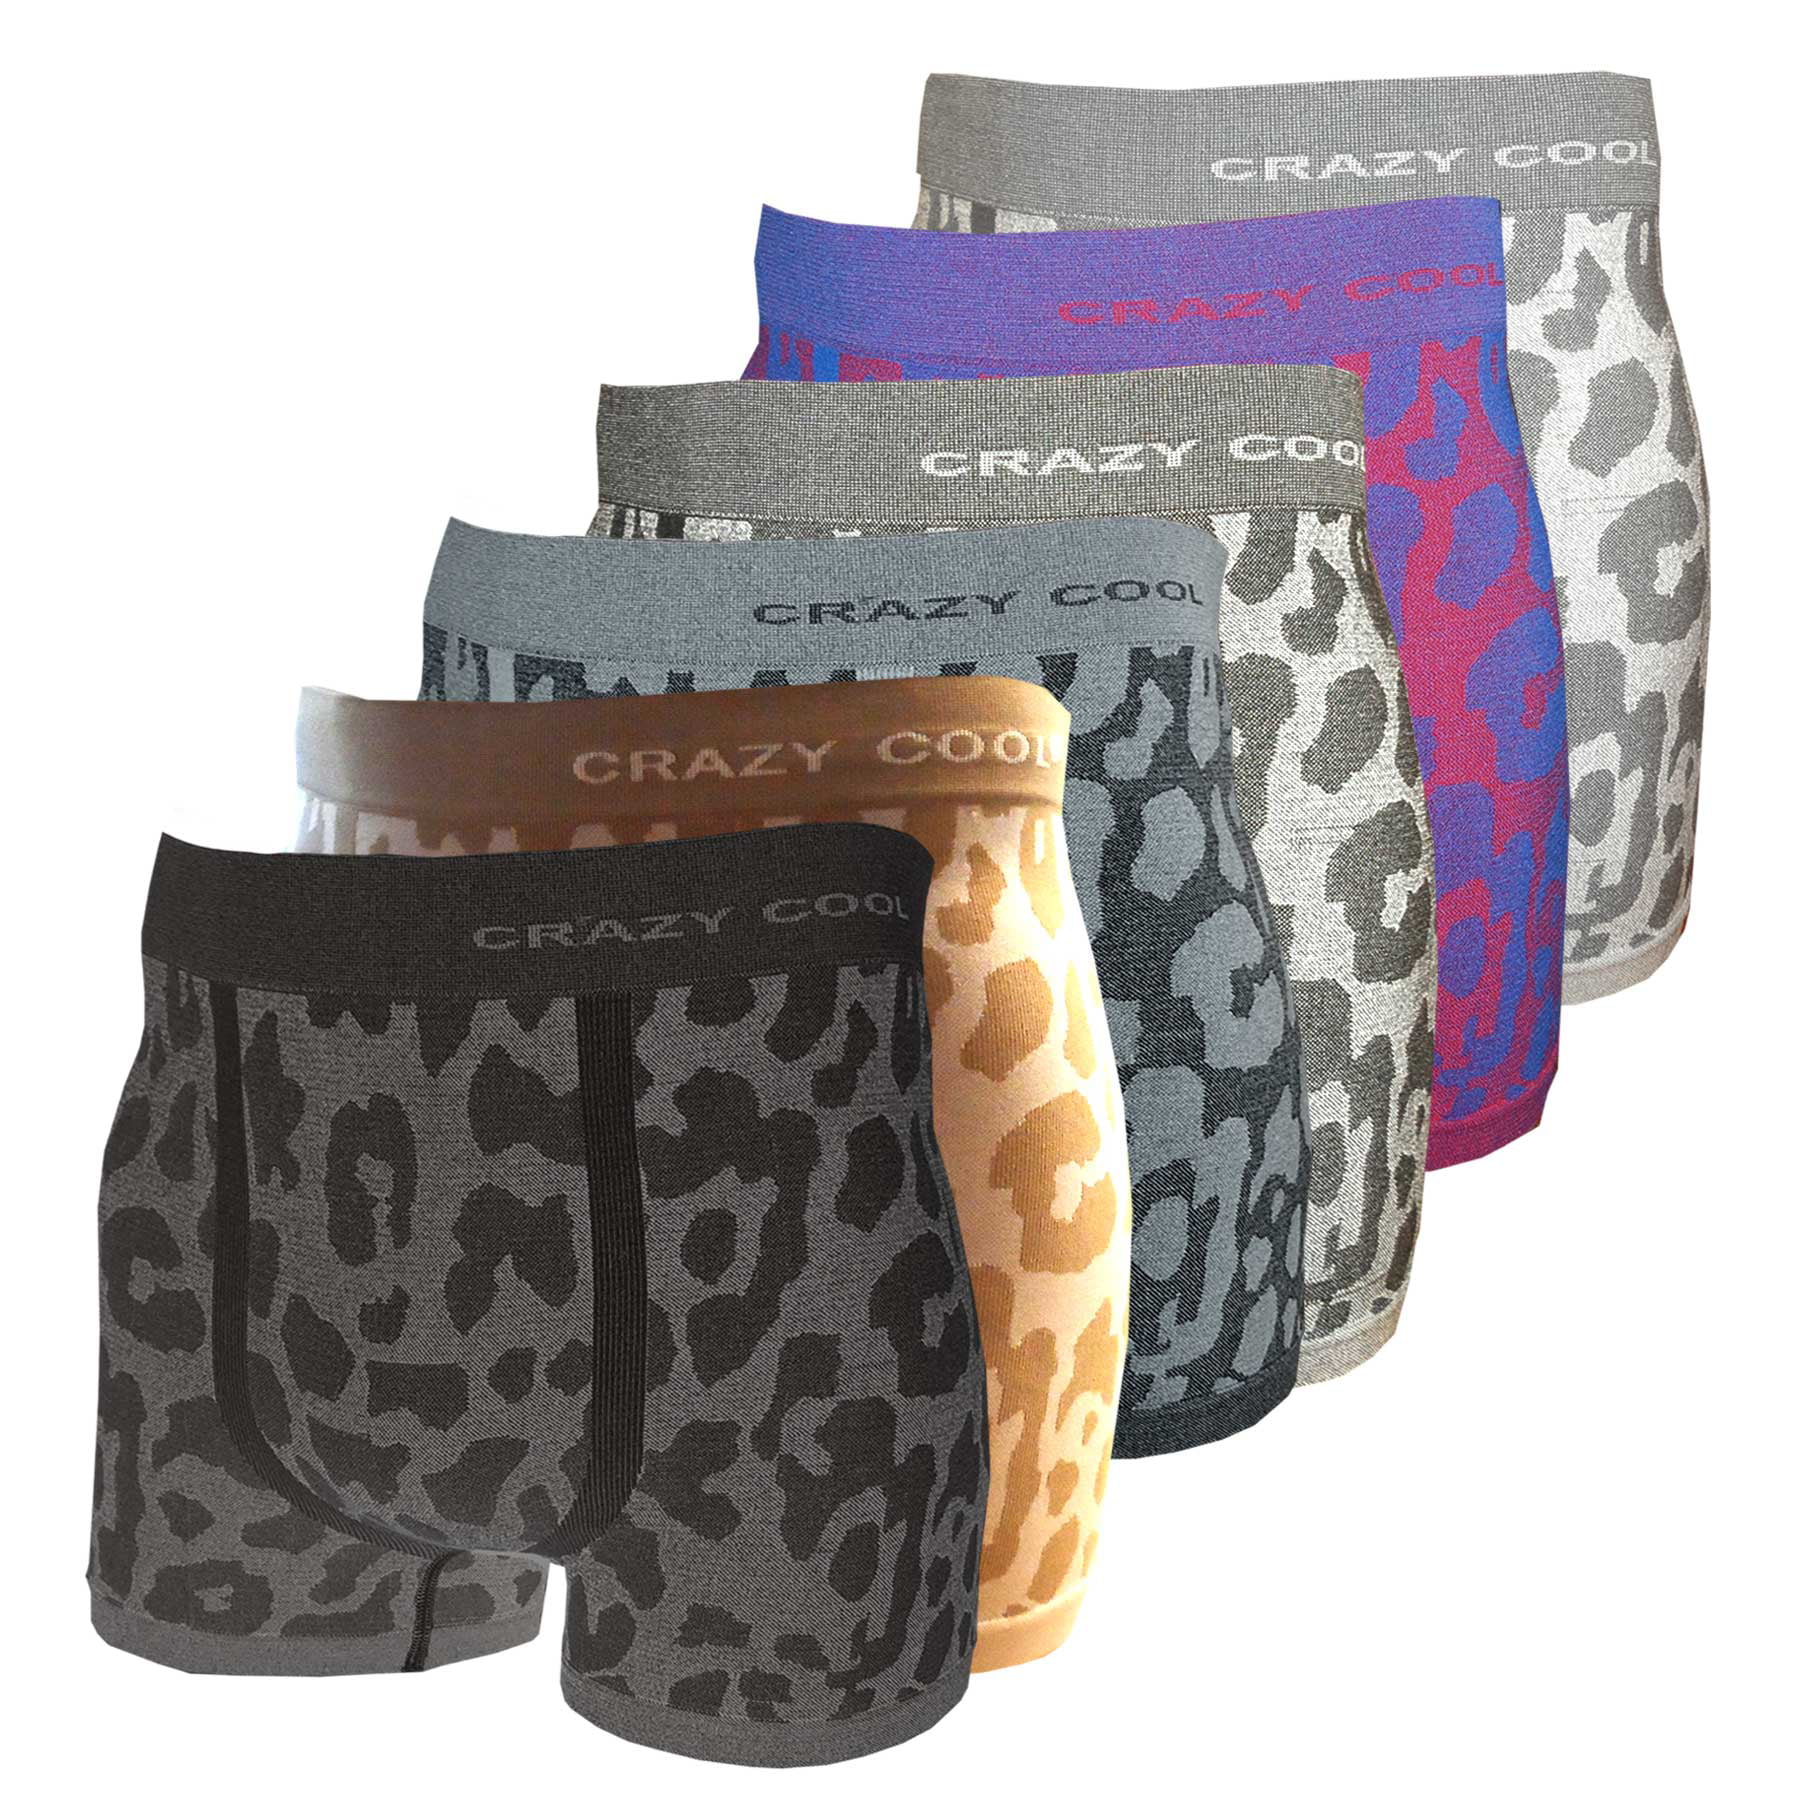 CRAZY BOXERS boxer shorts pack sorpesa 6 PCs printed men - AliExpress